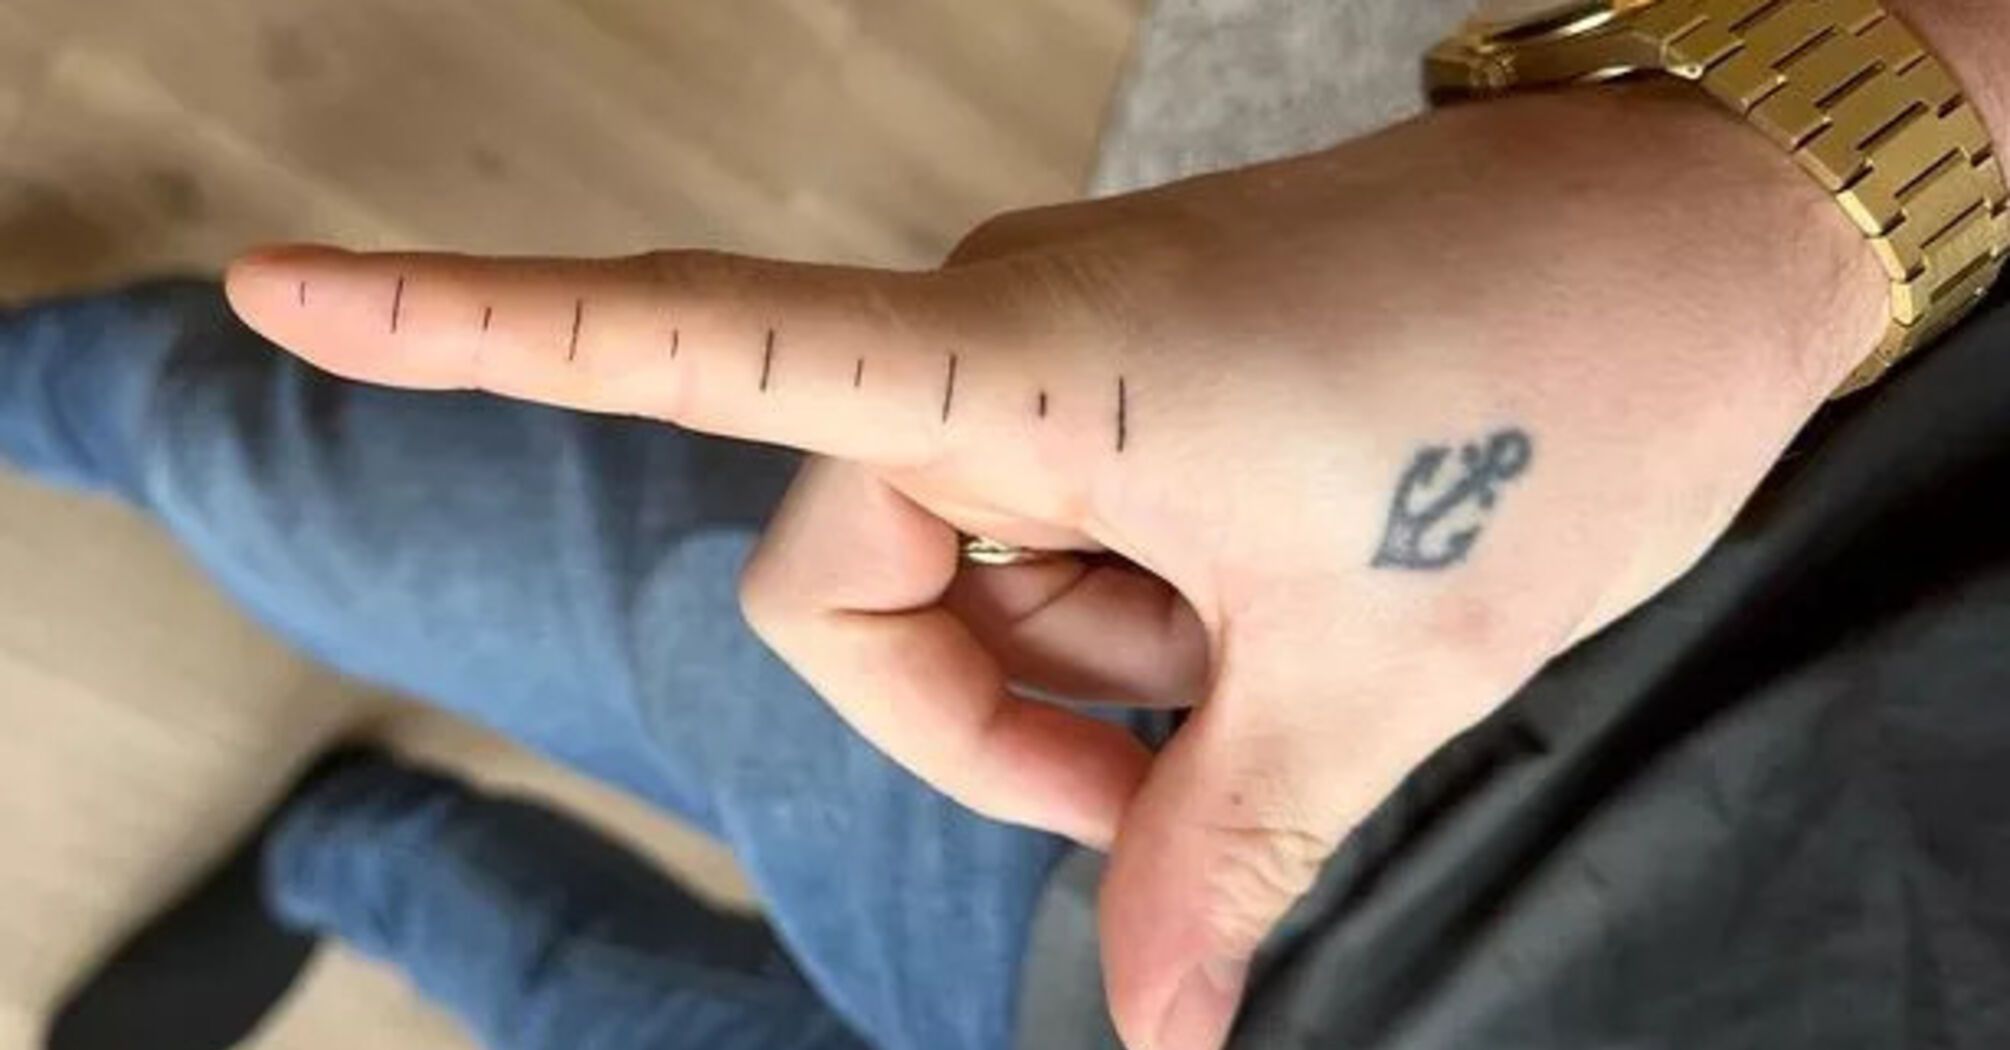 A man got a ruler tattoo on his index finger